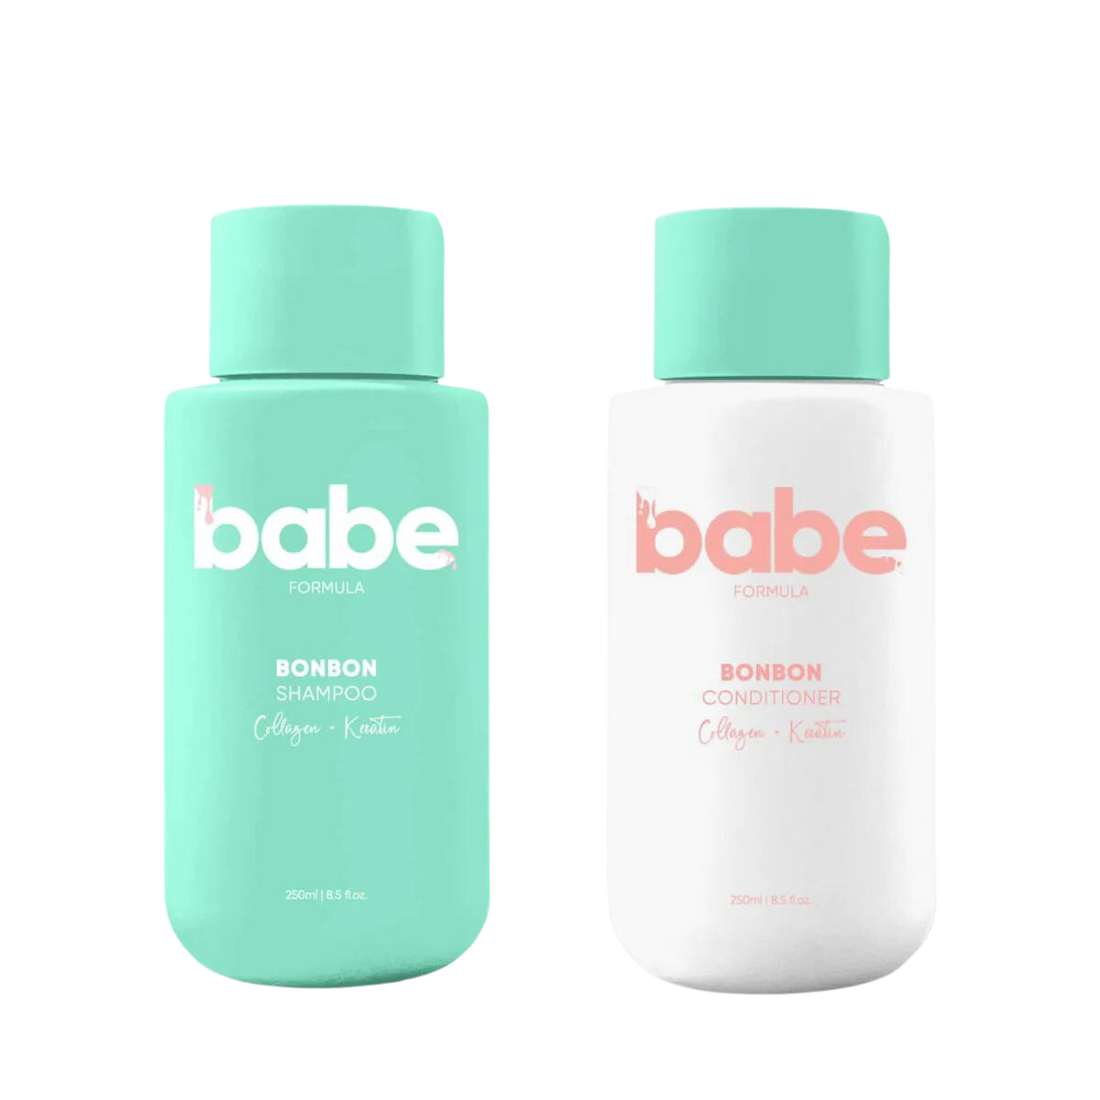 Babe Formula Shampoo and Conditioner - True Beauty Skin Essentials